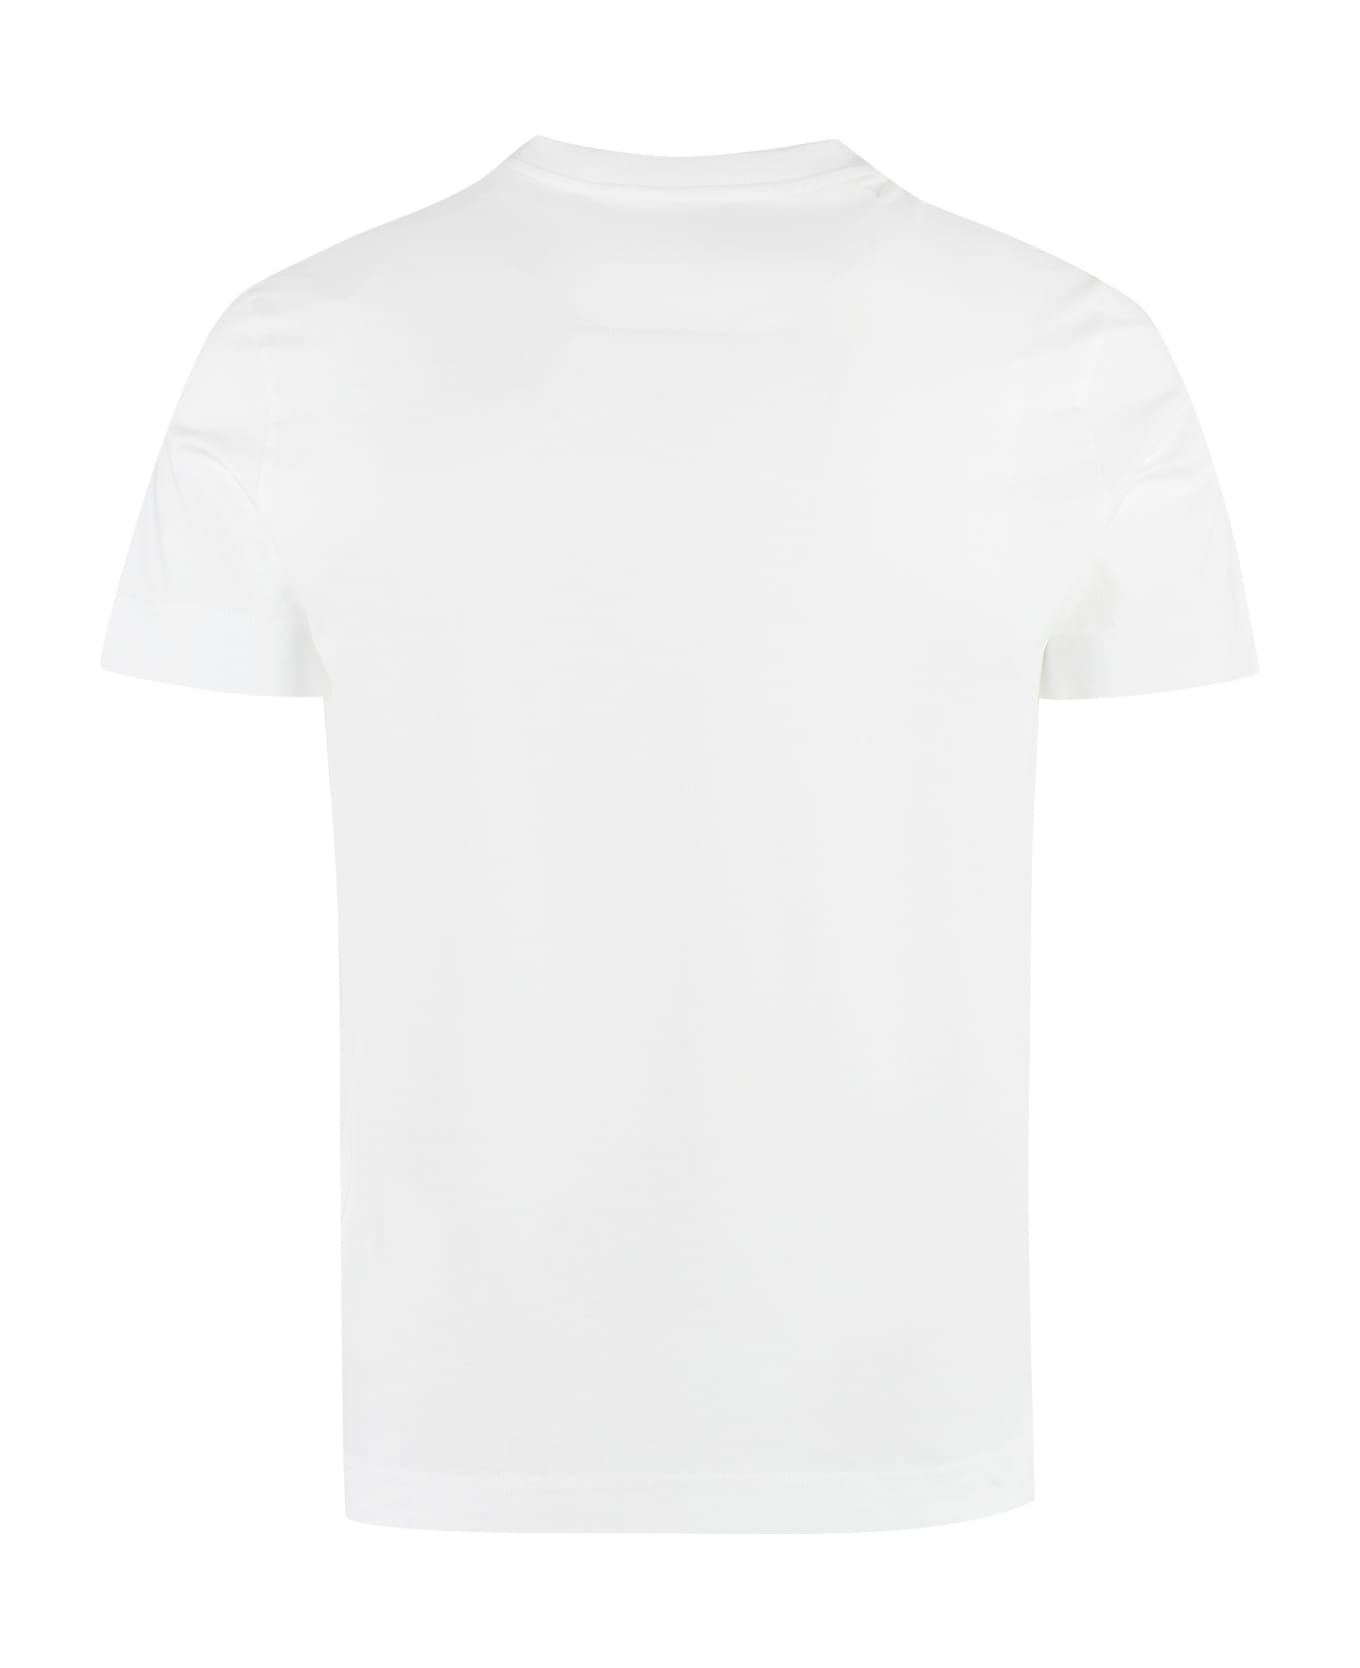 Givenchy Logo T-shirt - White